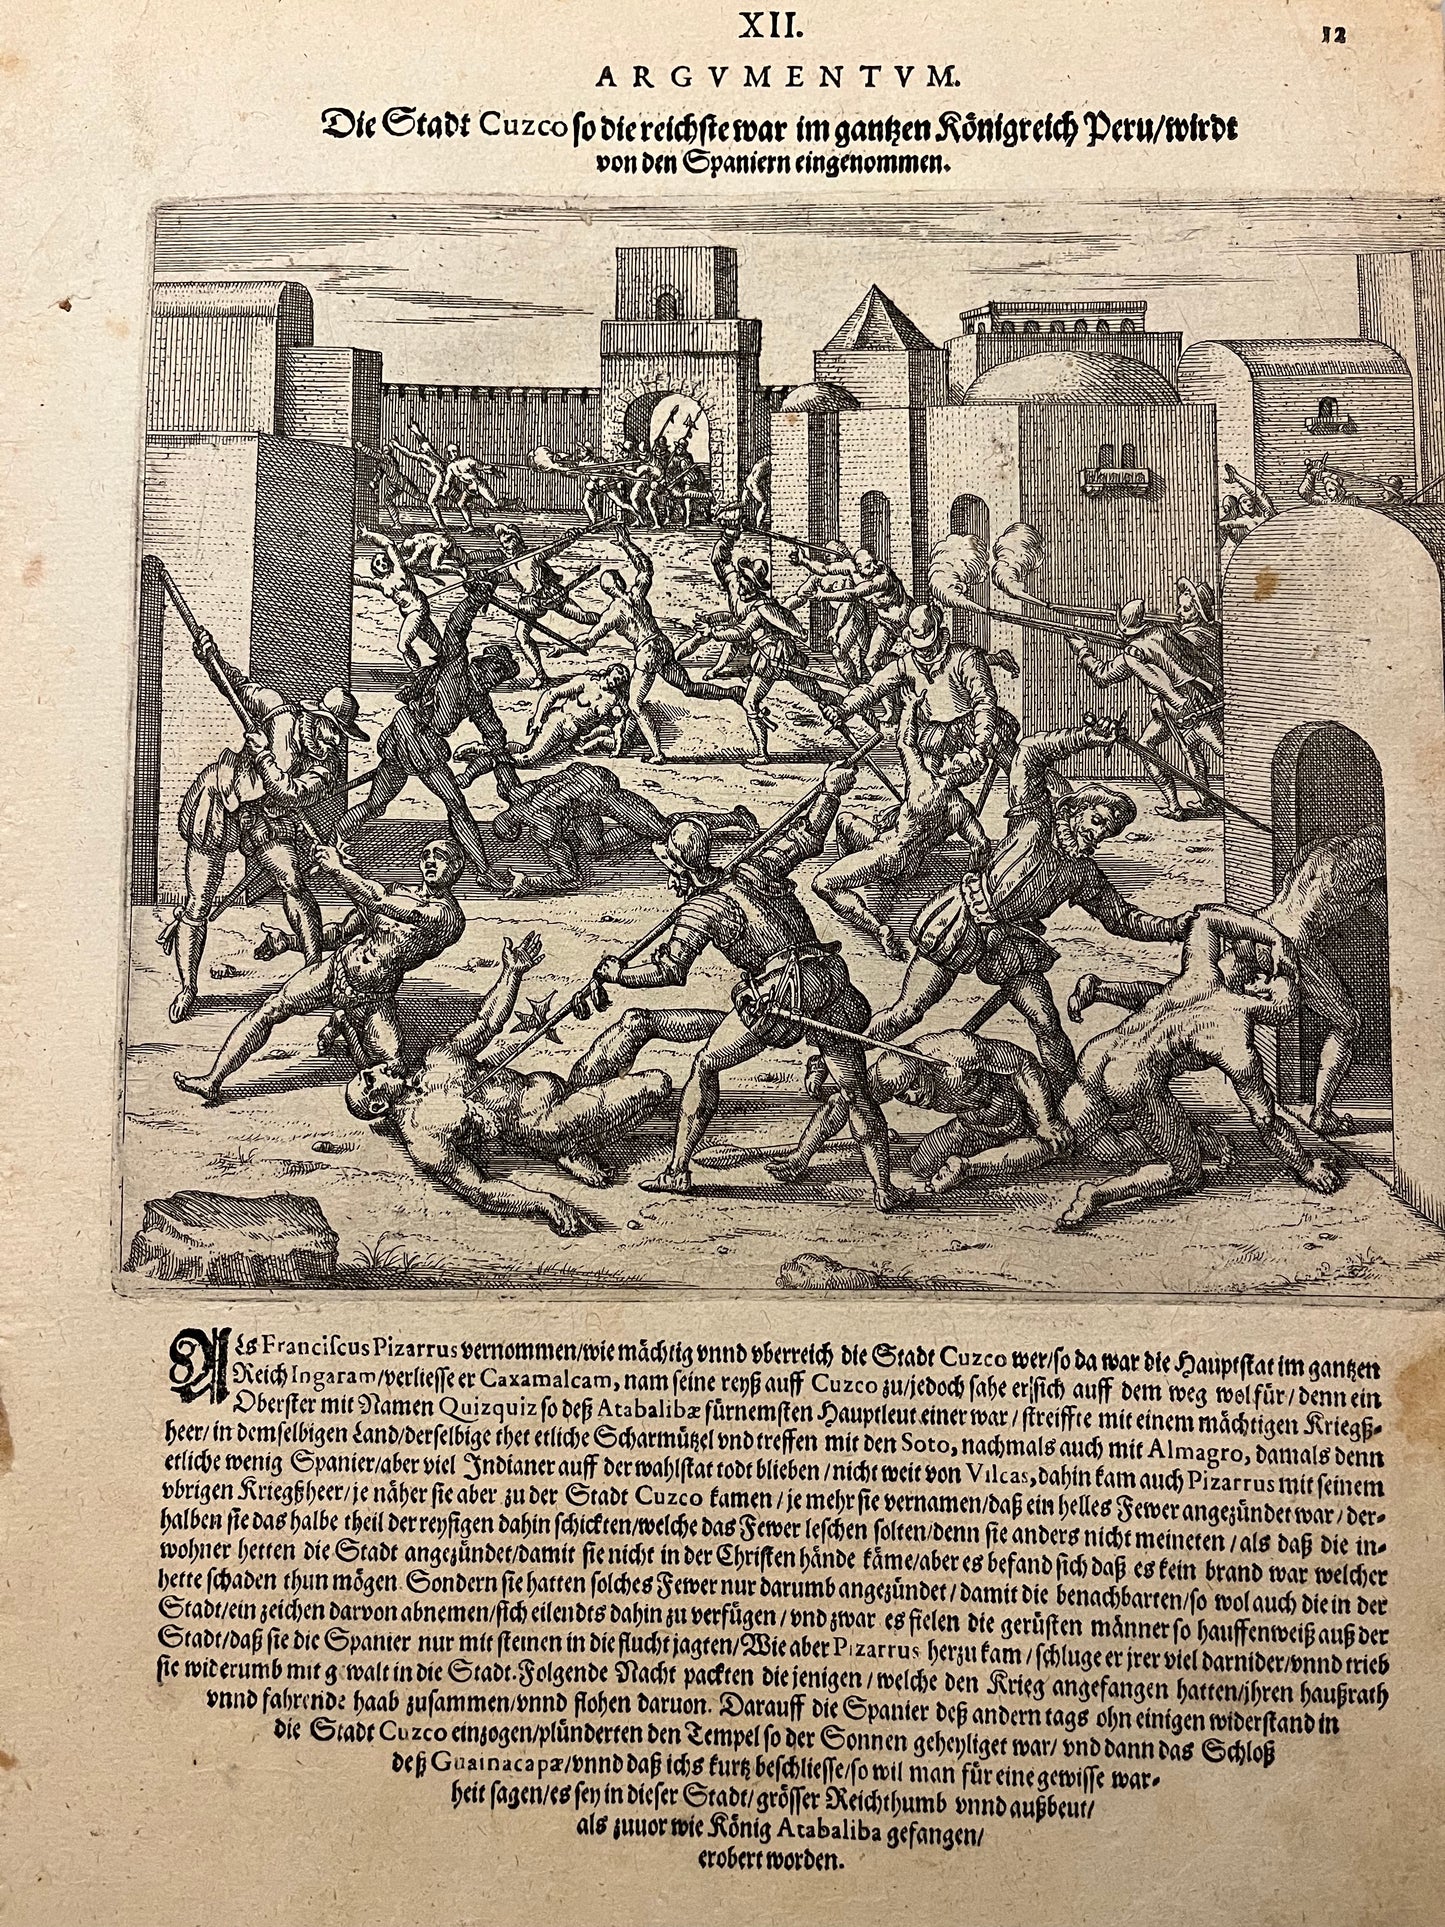 "The Spanish take over Cuzco" - De Bry - 1596